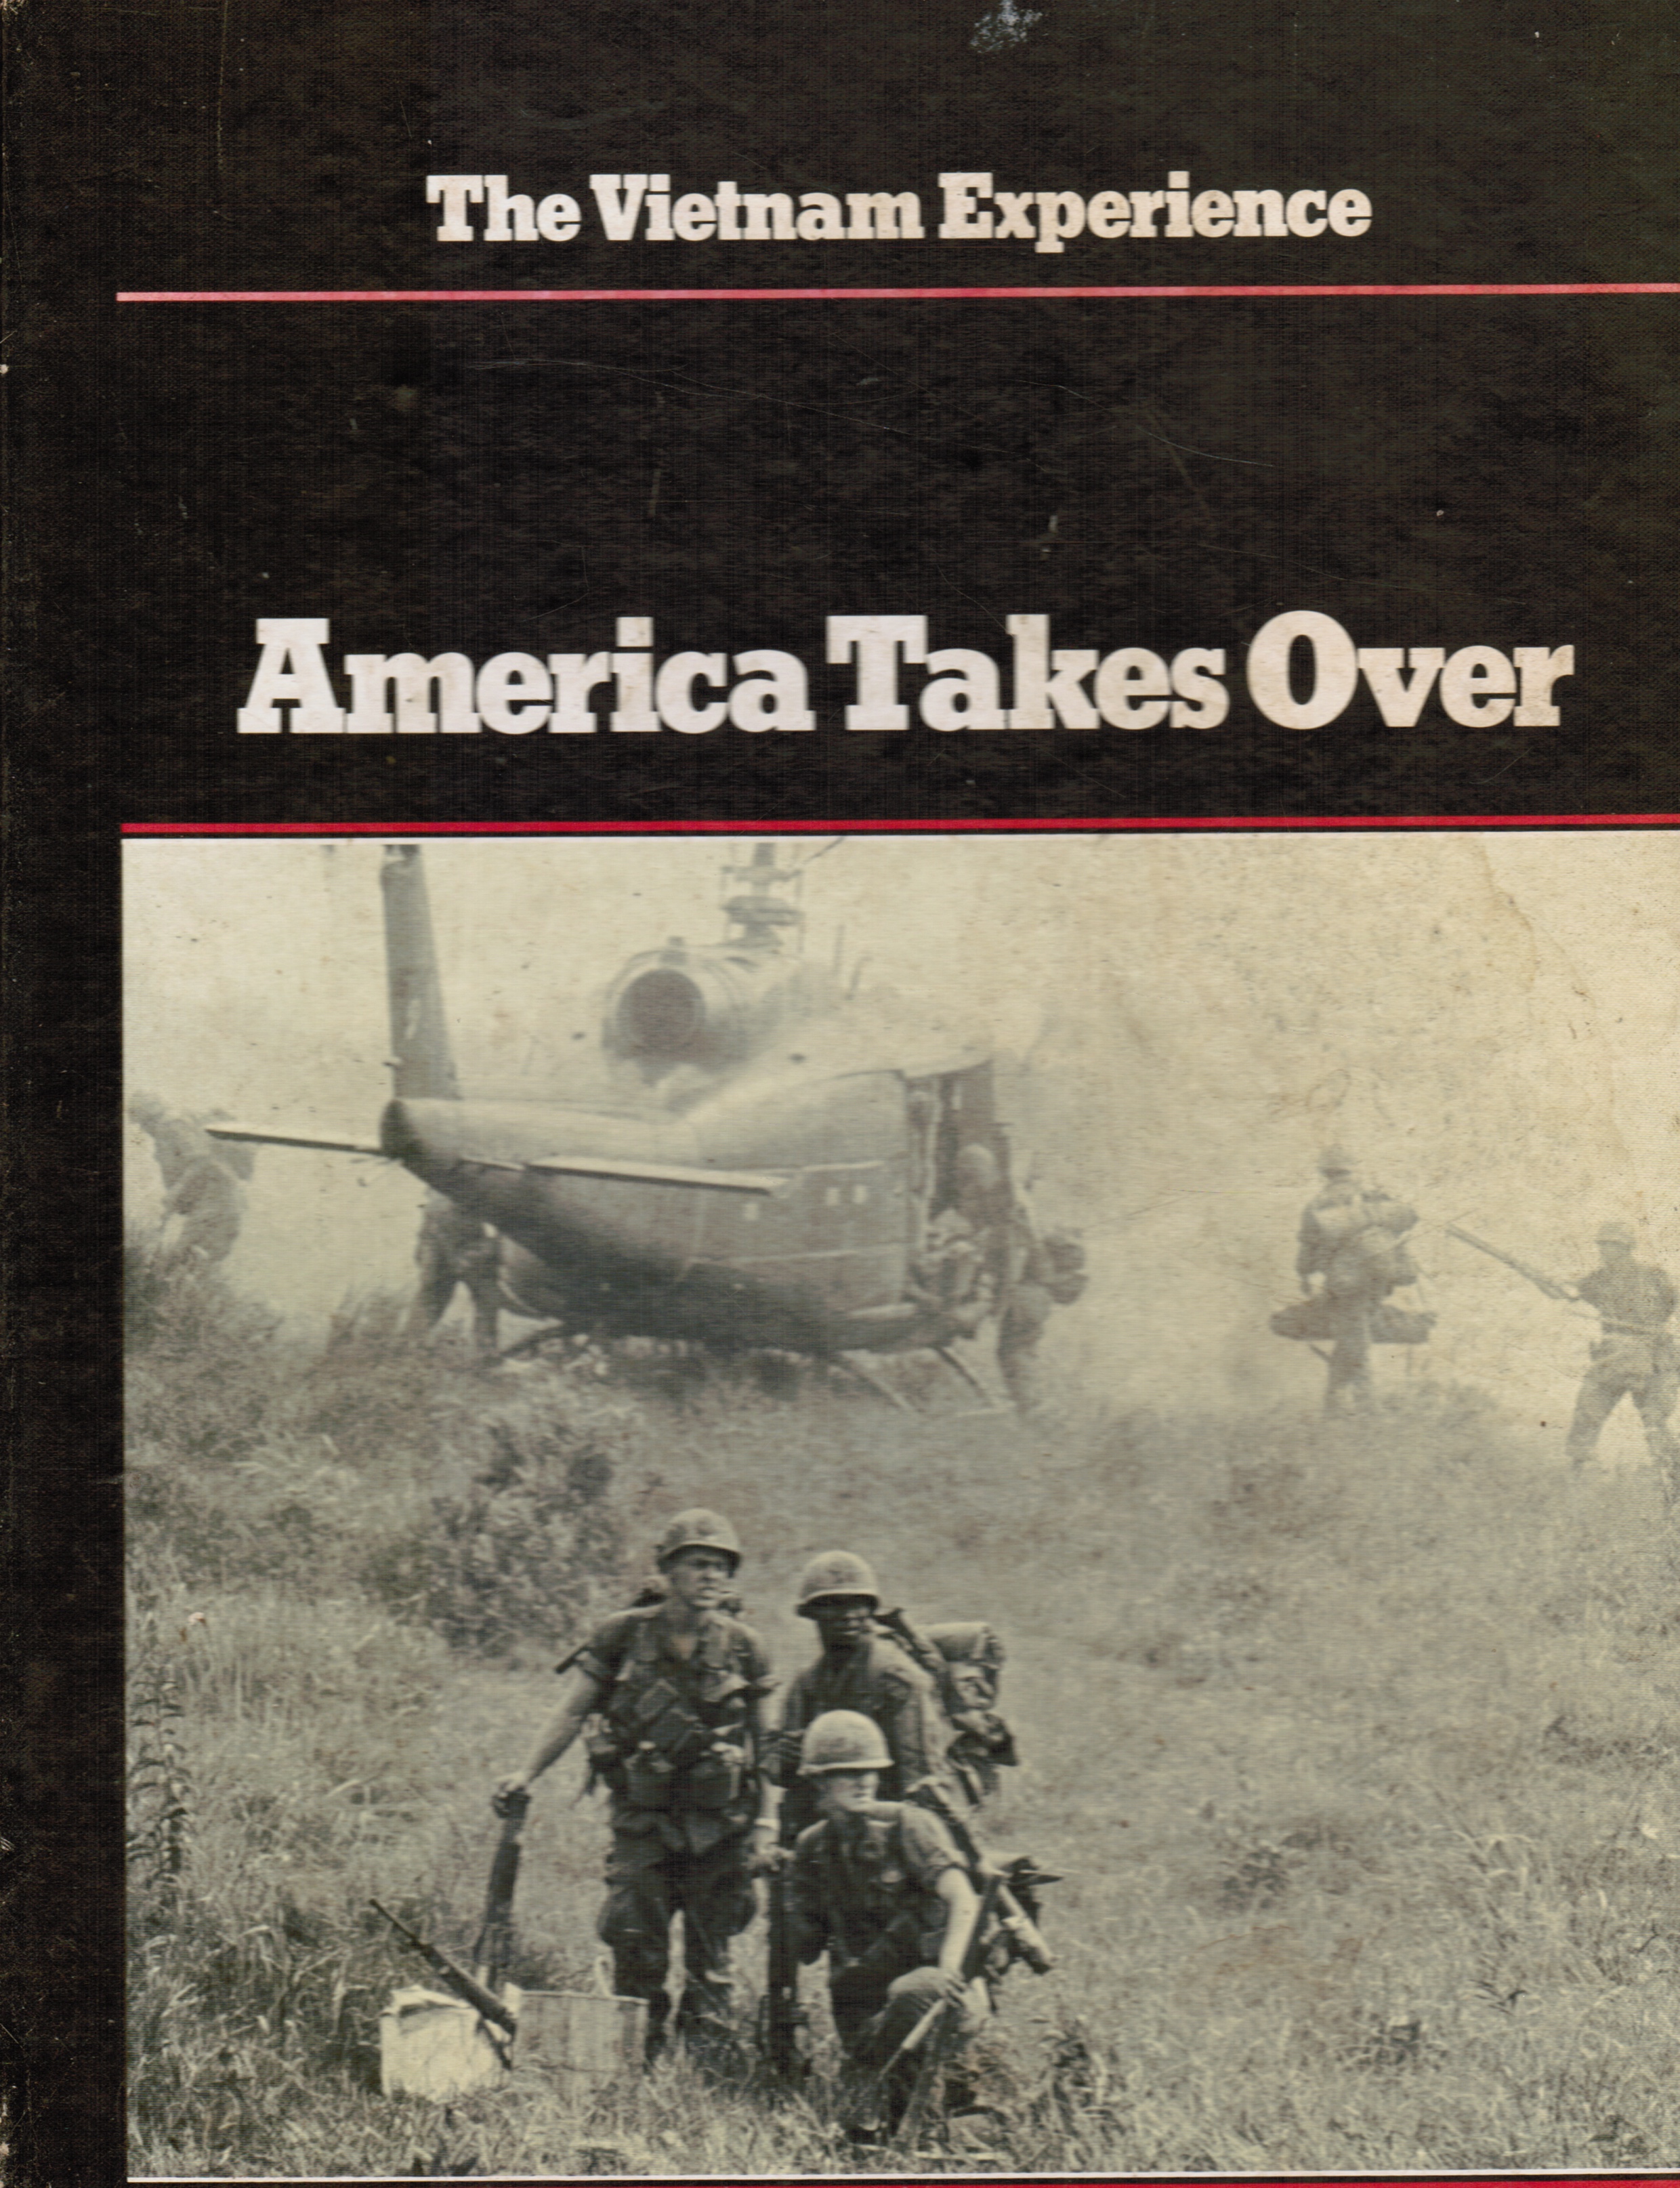 DOYLE, EDWARD AND SAMUEL LIPSMAN - America Takes over, 1965 - 67